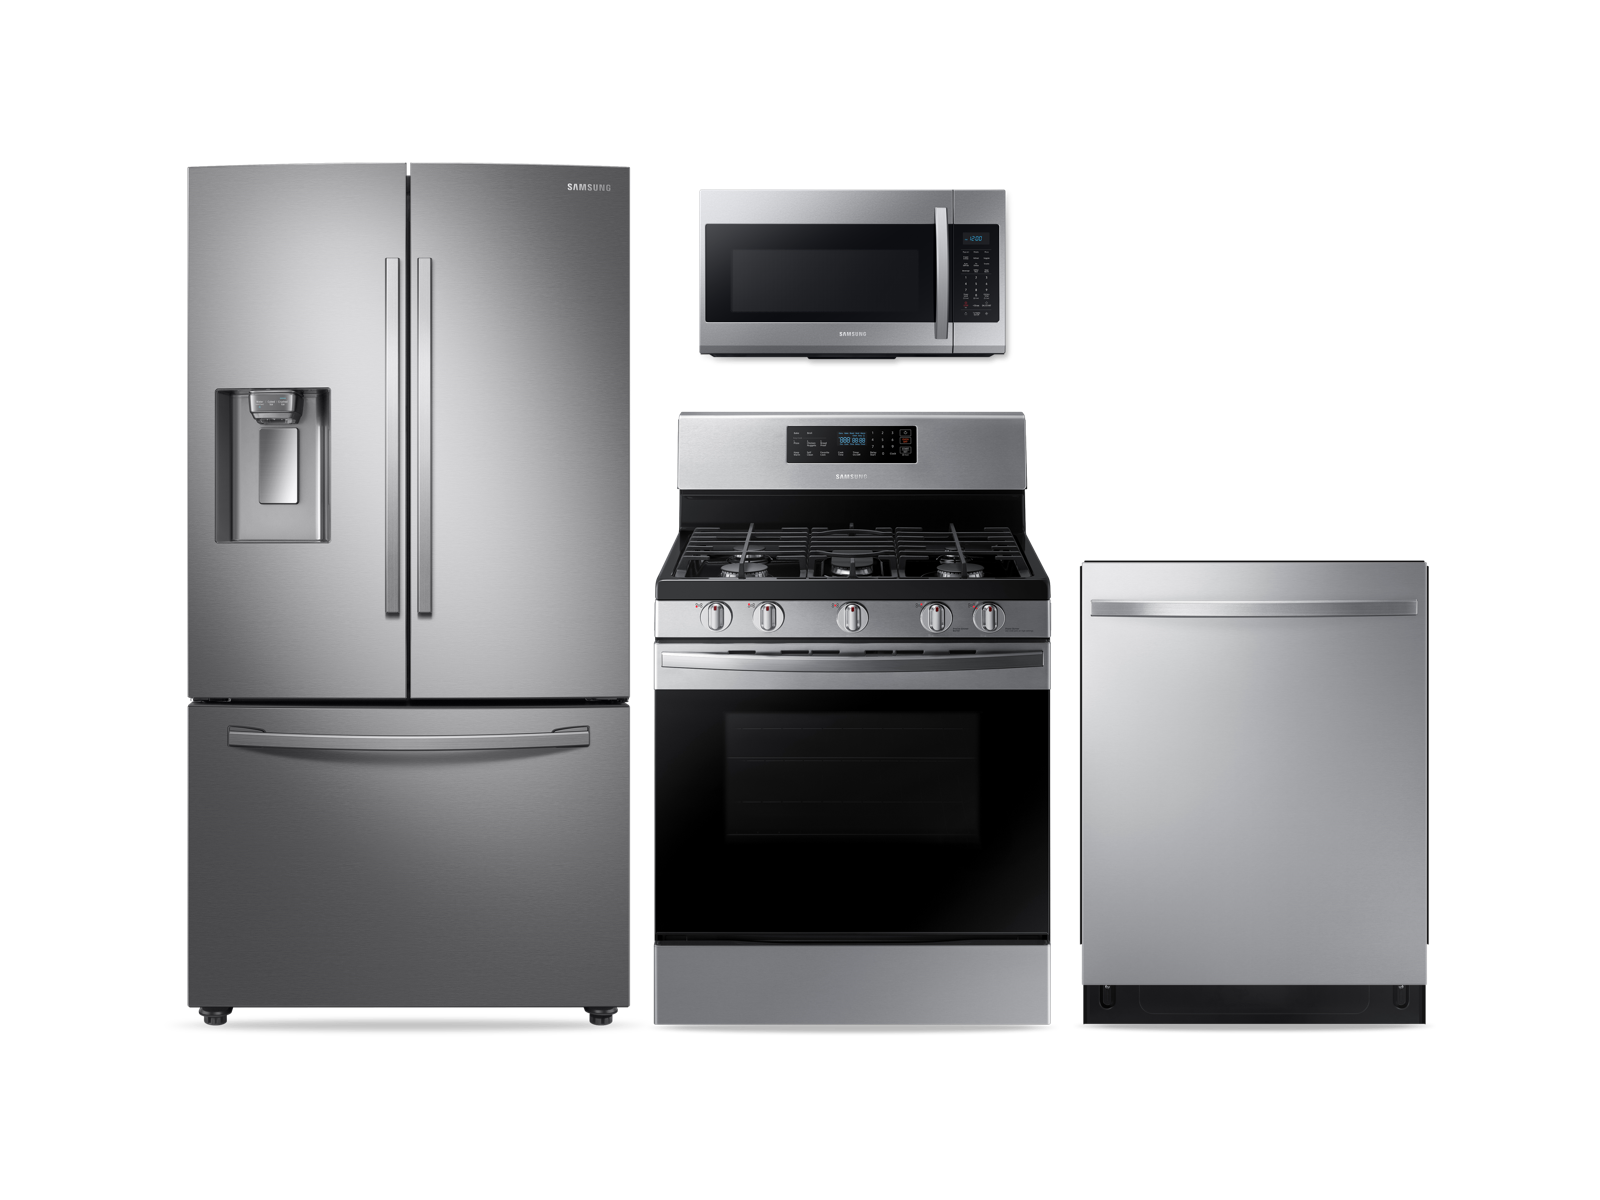 Samsung Large Capacity 3-door Refrigerator + Gas Range + StormWash Dishwasher + Microwave Kitchen Package in Stainless Steel(BNDL-1646991127622)